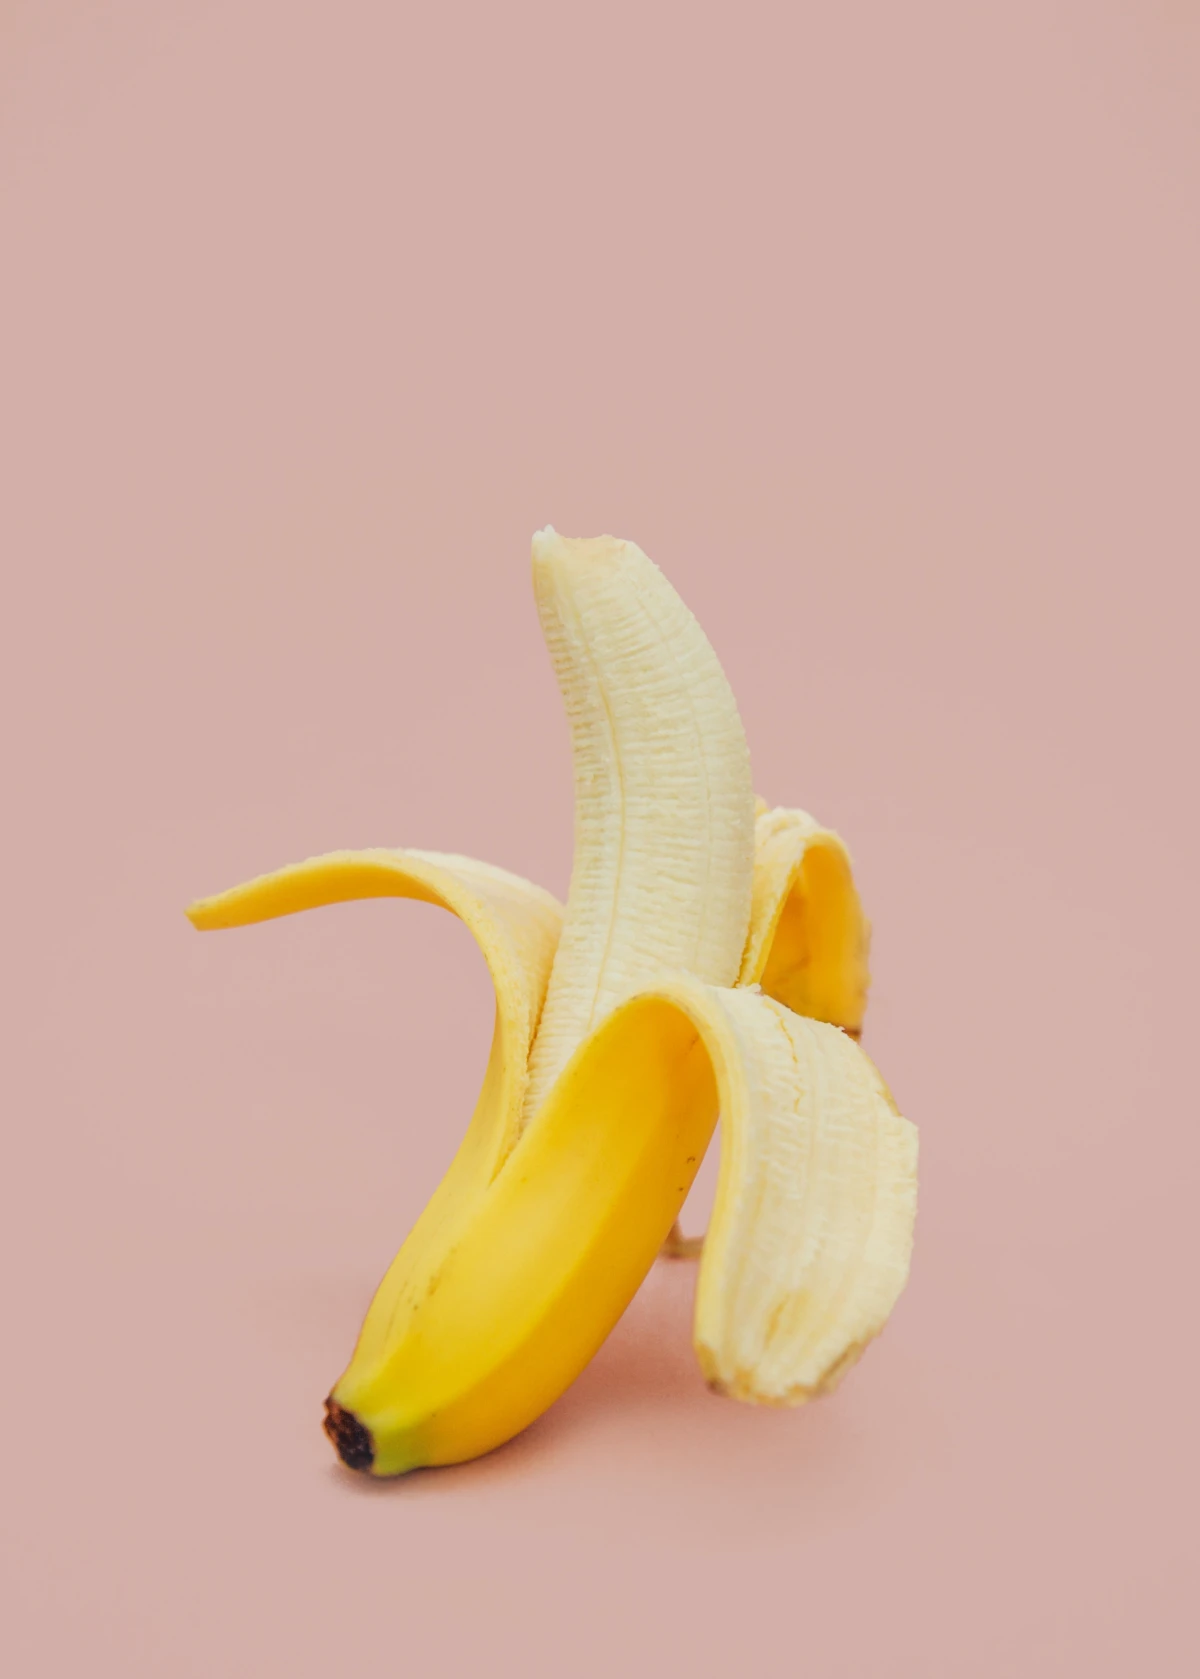 banan on pink background